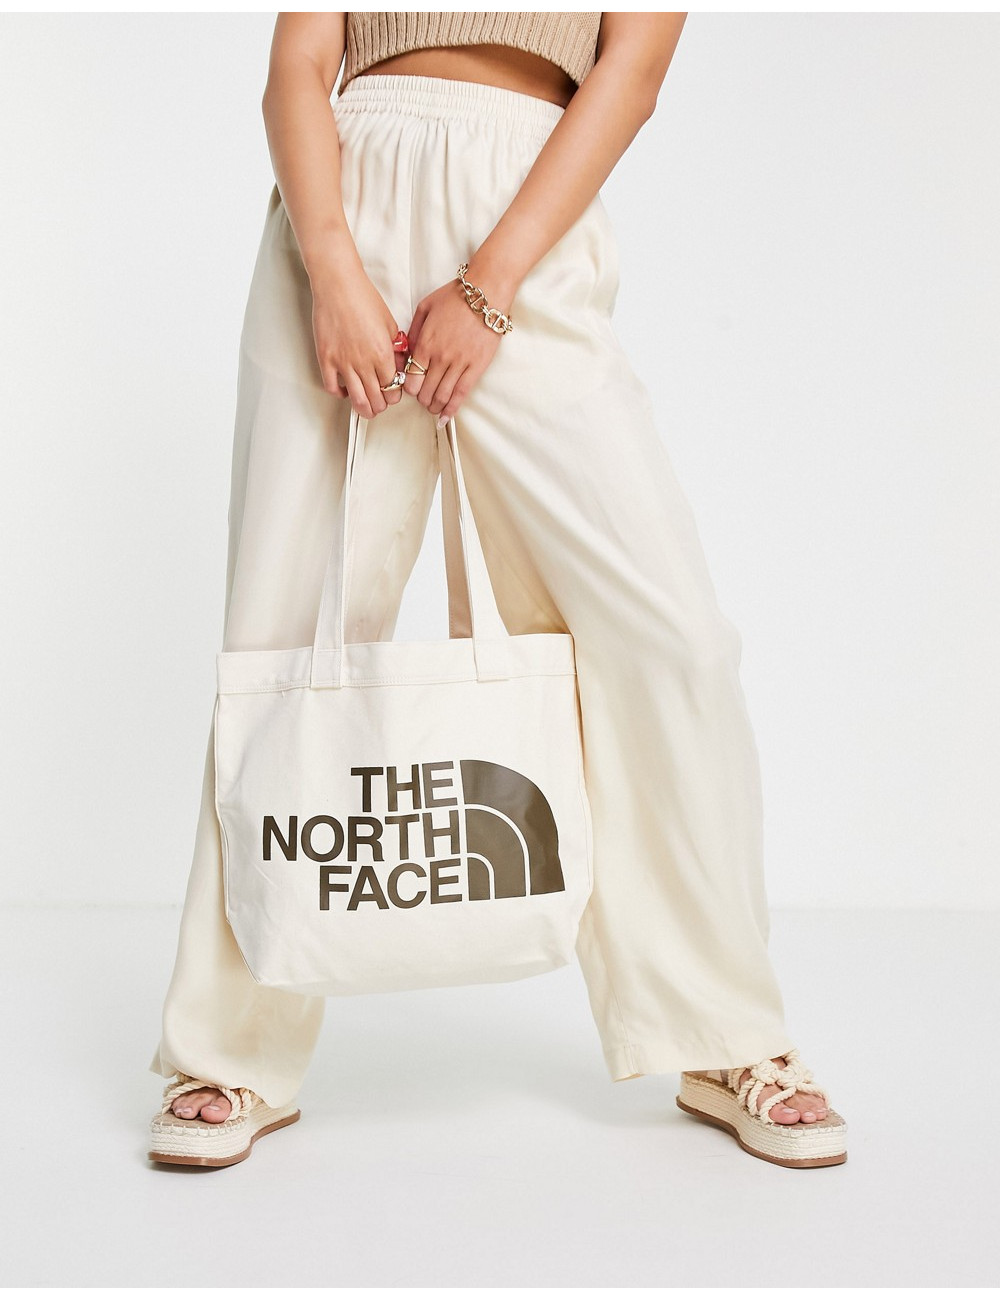 The North Face Cotton tote...